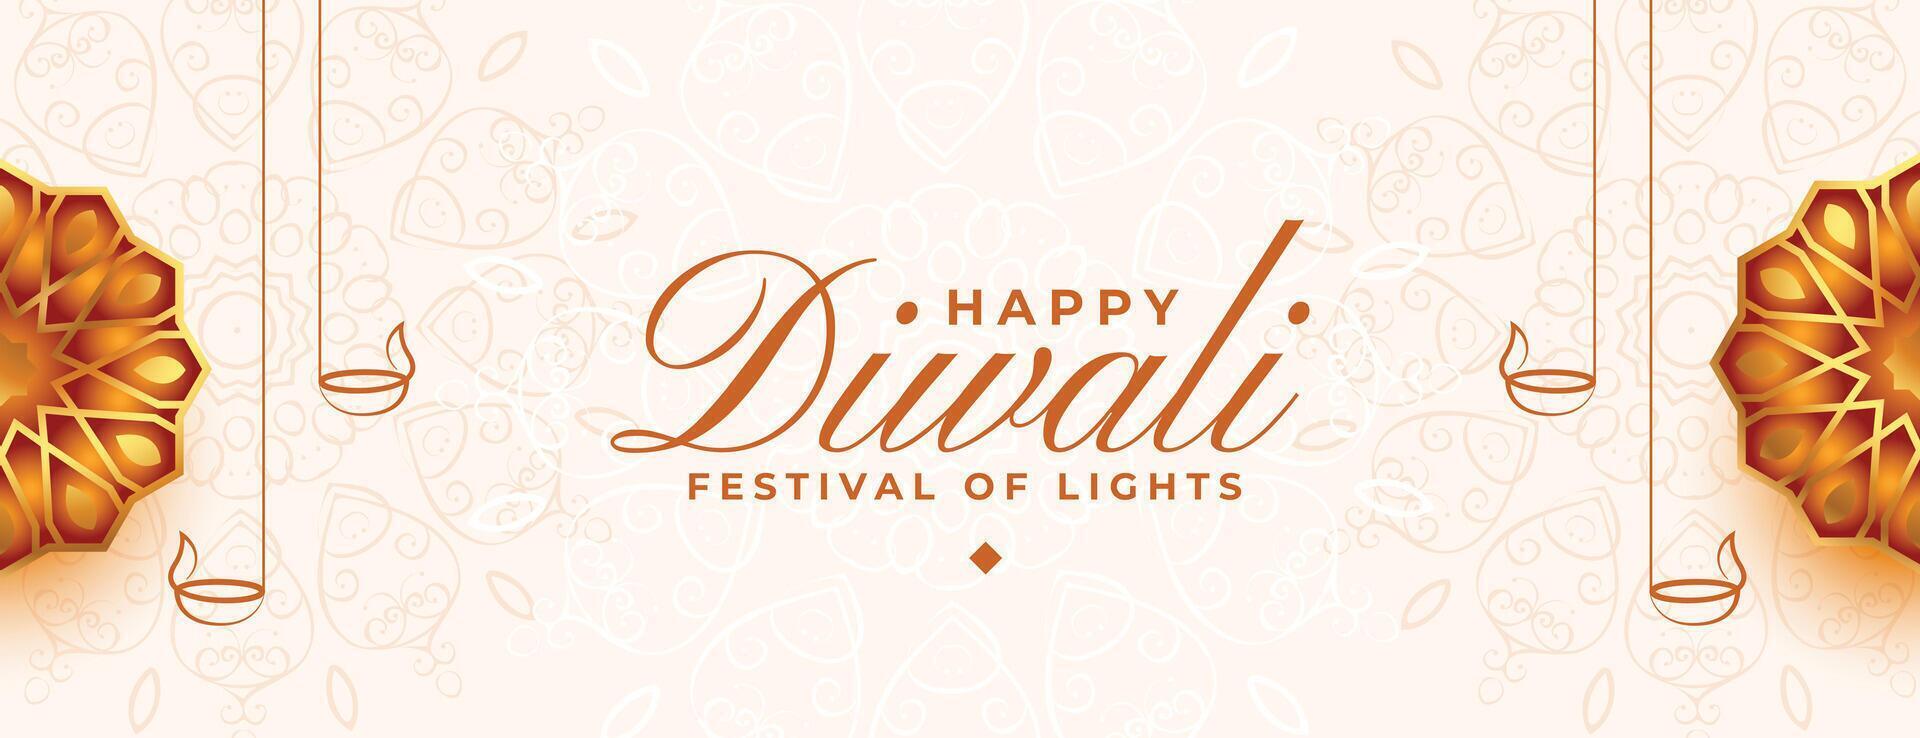 happy diwali celebration web banner design vector